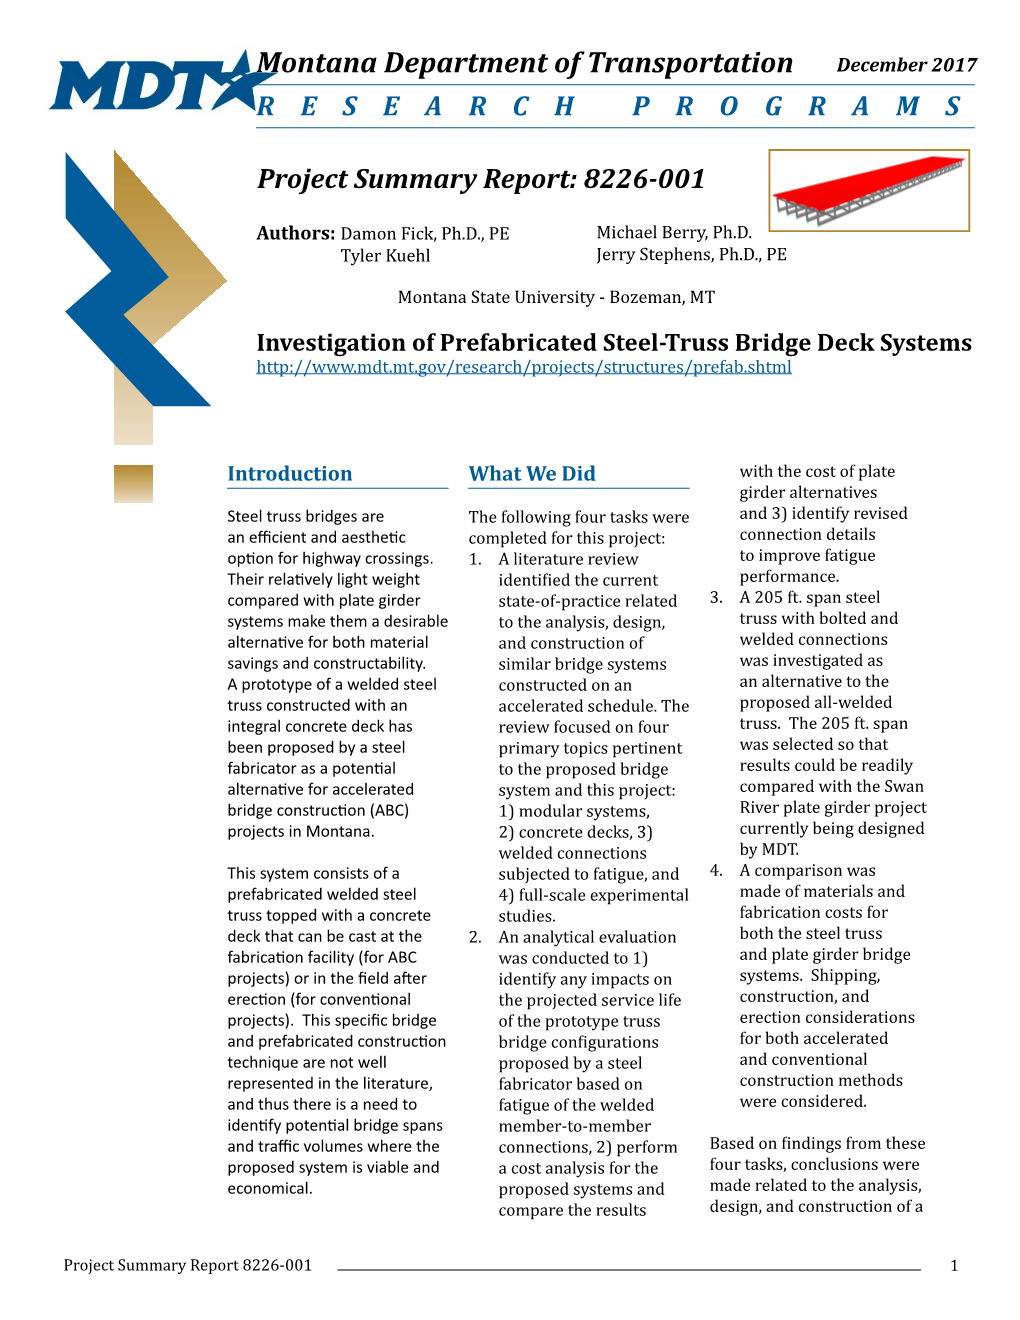 Investigation of Prefabricated Steel-Truss Bridge Deck Systems